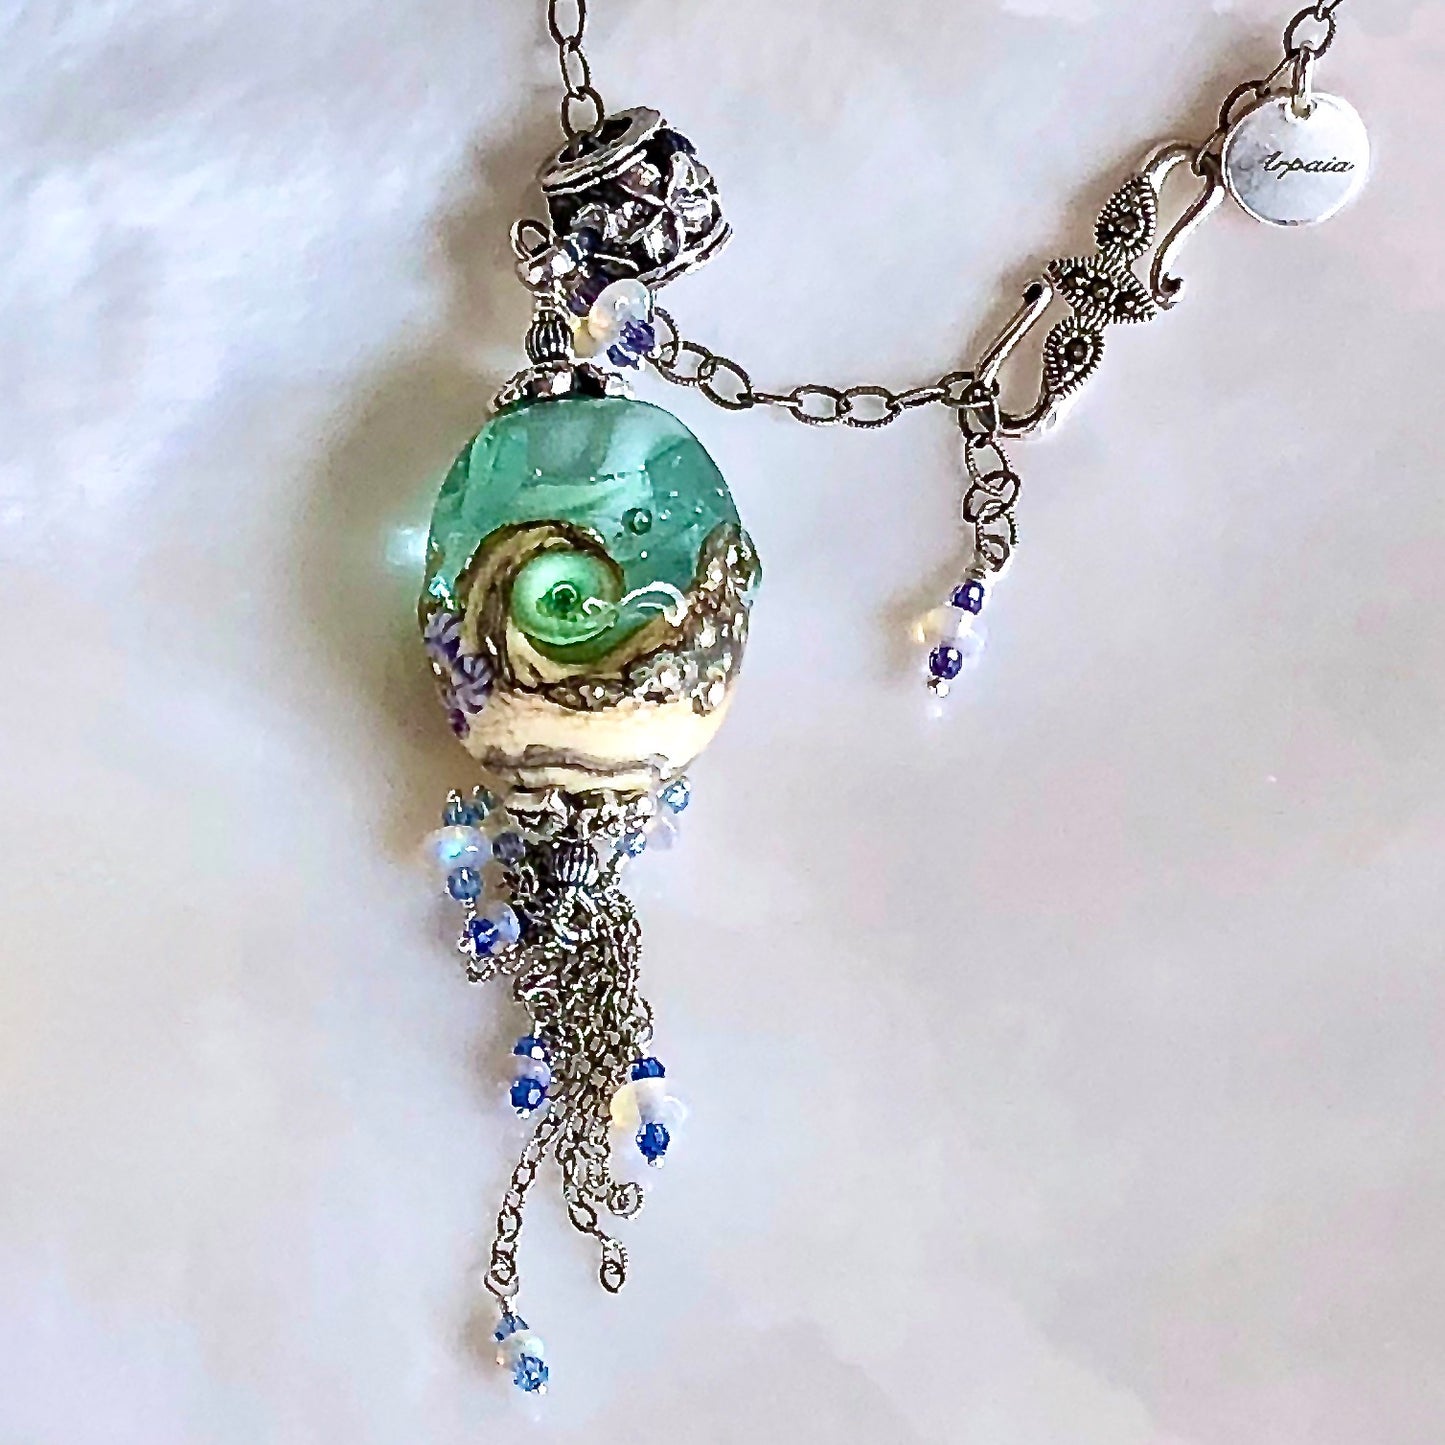 Seven Seas beachlove necklace by Arpaia